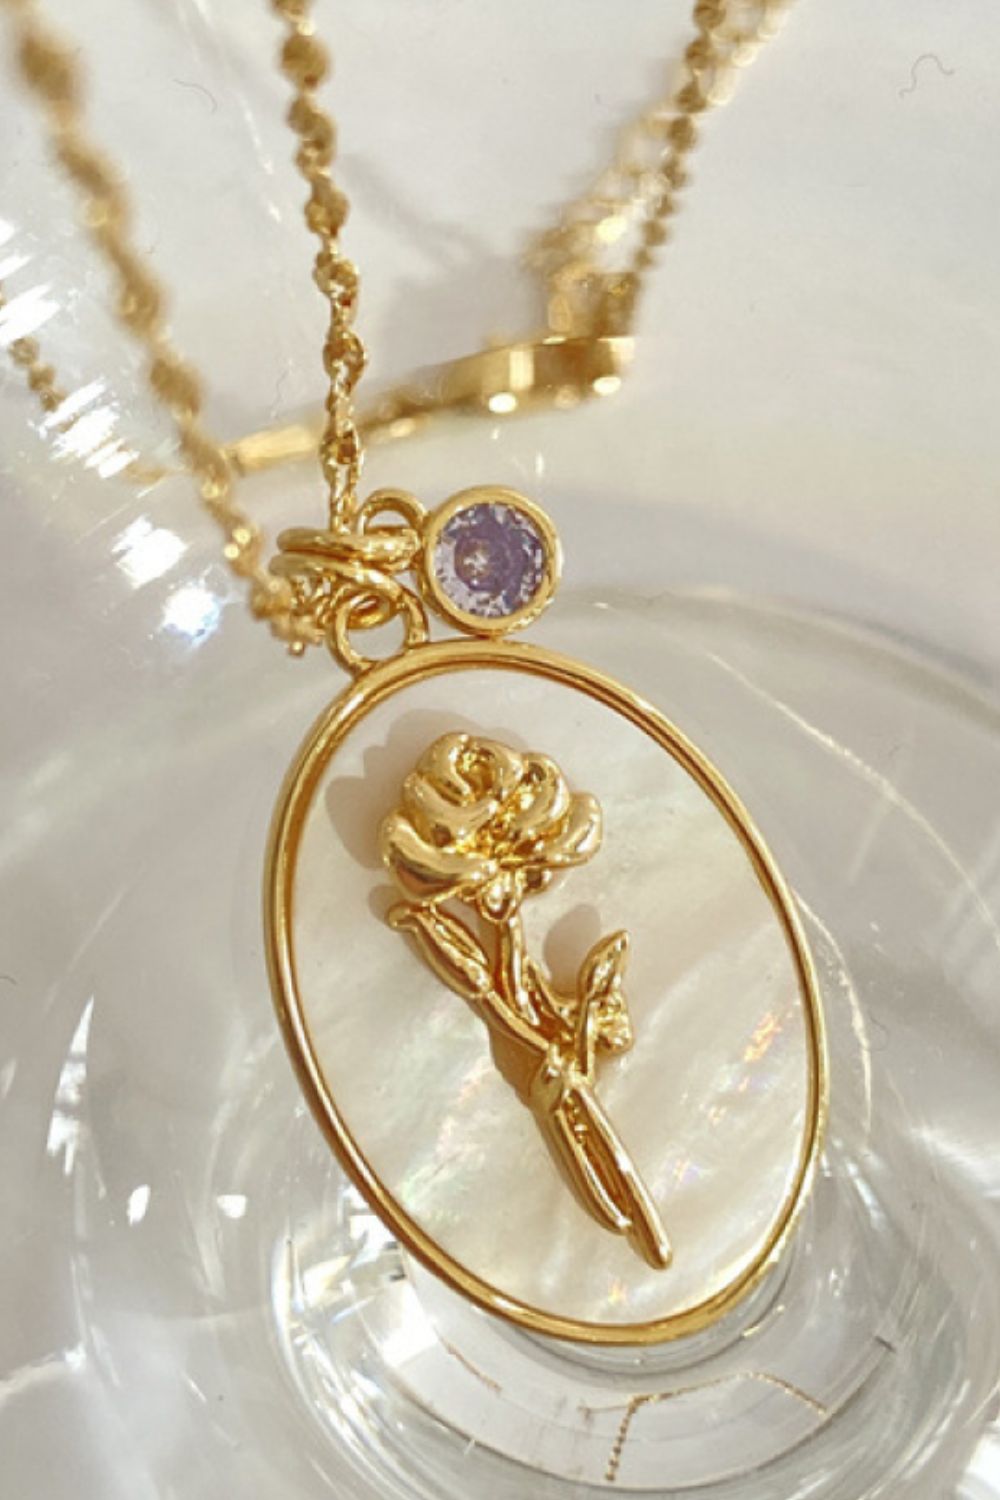 Flower Shell Pendant Copper Necklace